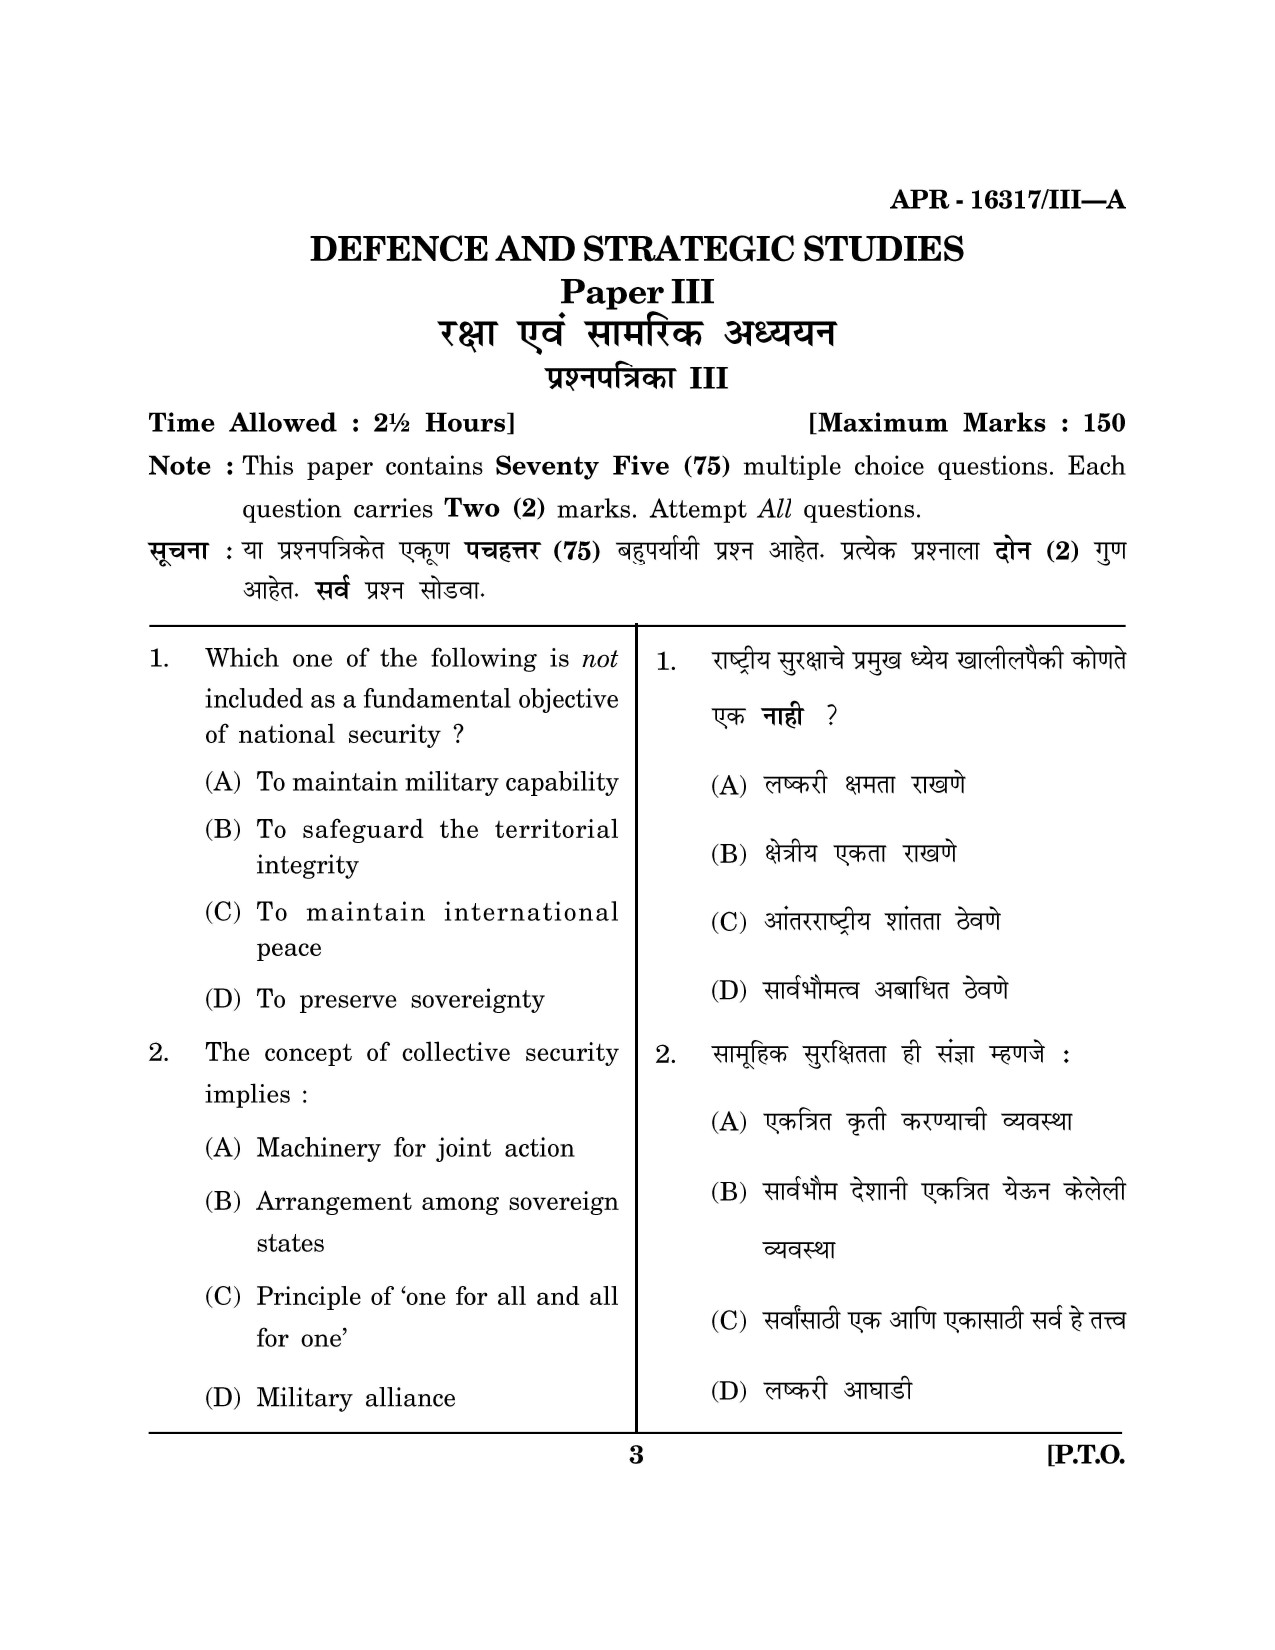 Maharashtra SET Defence and Strategic Studies Question Paper III April 2017 2